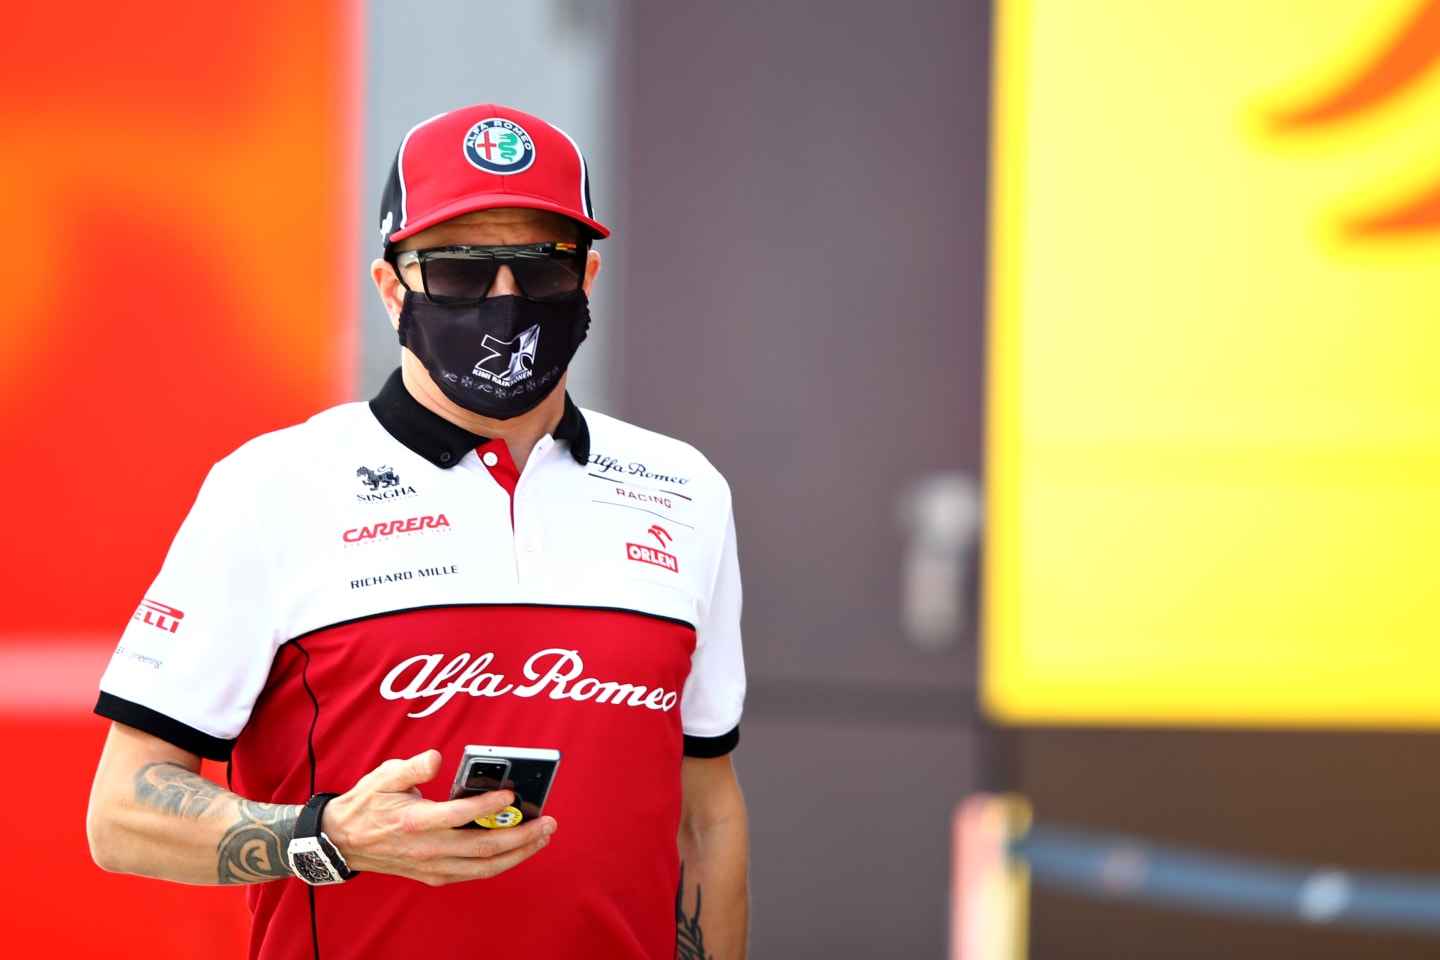 PORTIMAO, PORTUGAL - OCTOBER 22: Kimi Raikkonen of Finland and Alfa Romeo Racing walks in the